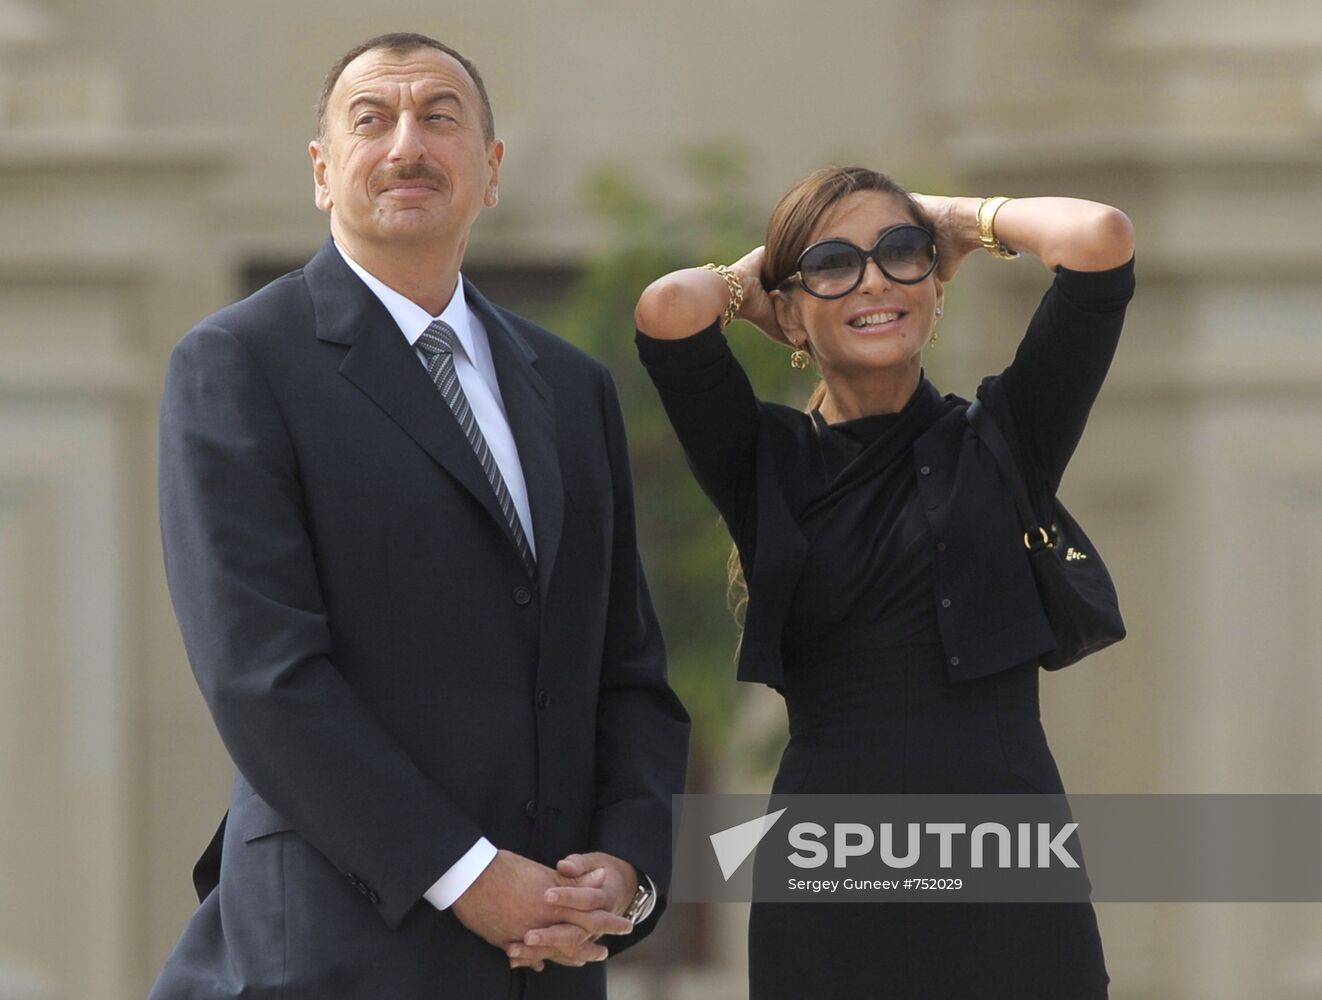 Azerbaijani President Ilkham Aliyev and his wife, Mekhriban